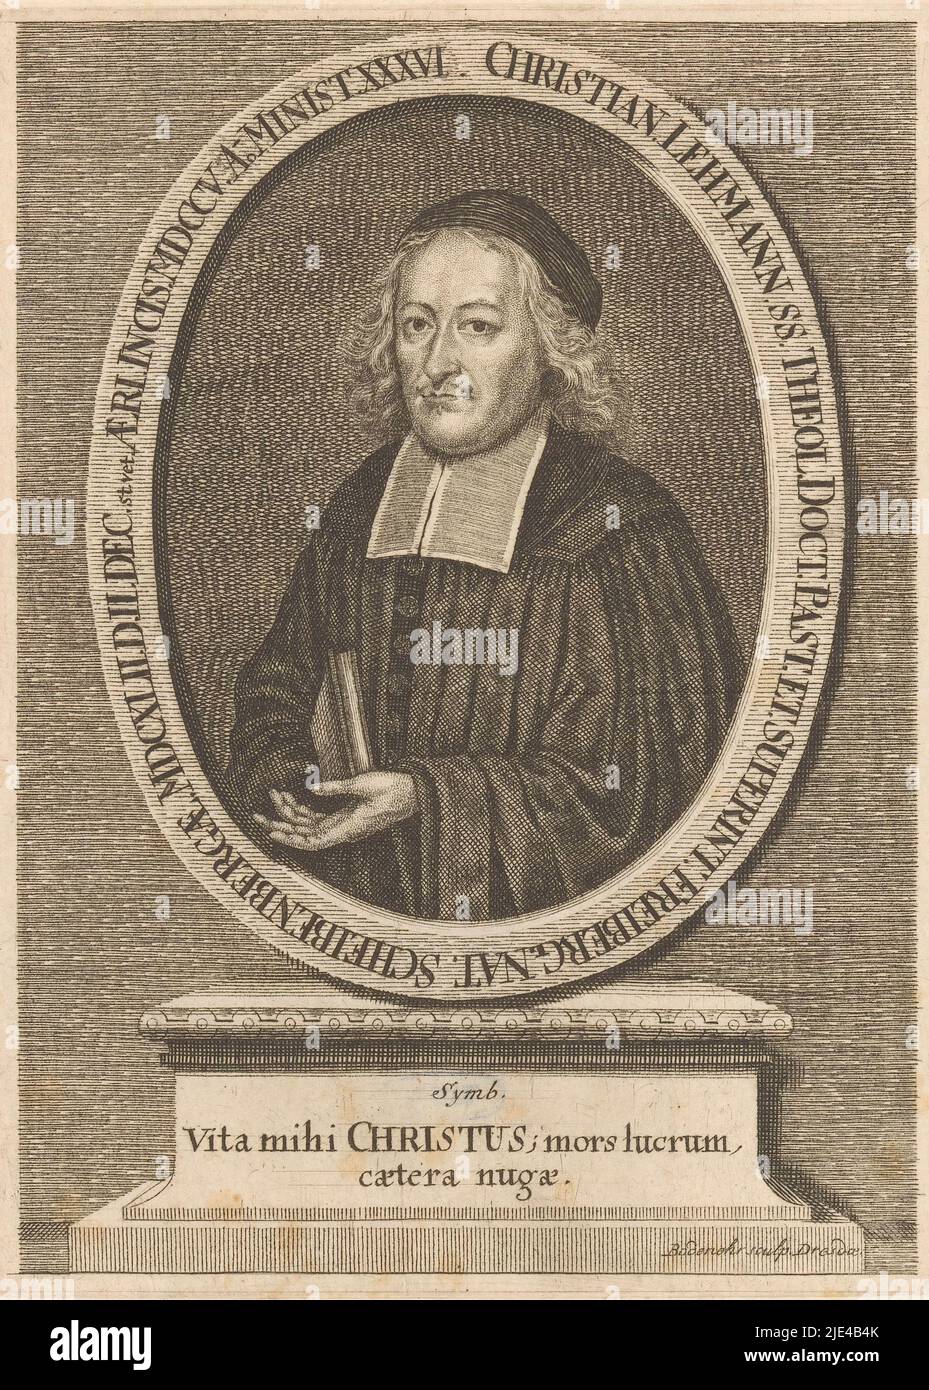 Portrait of Christian Lehmann, Moritz Bodenehr, 1705, print maker: Moritz Bodenehr, (mentioned on object), Dresden, 1705, paper, engraving, h 190 mm - w 139 mm Stock Photo